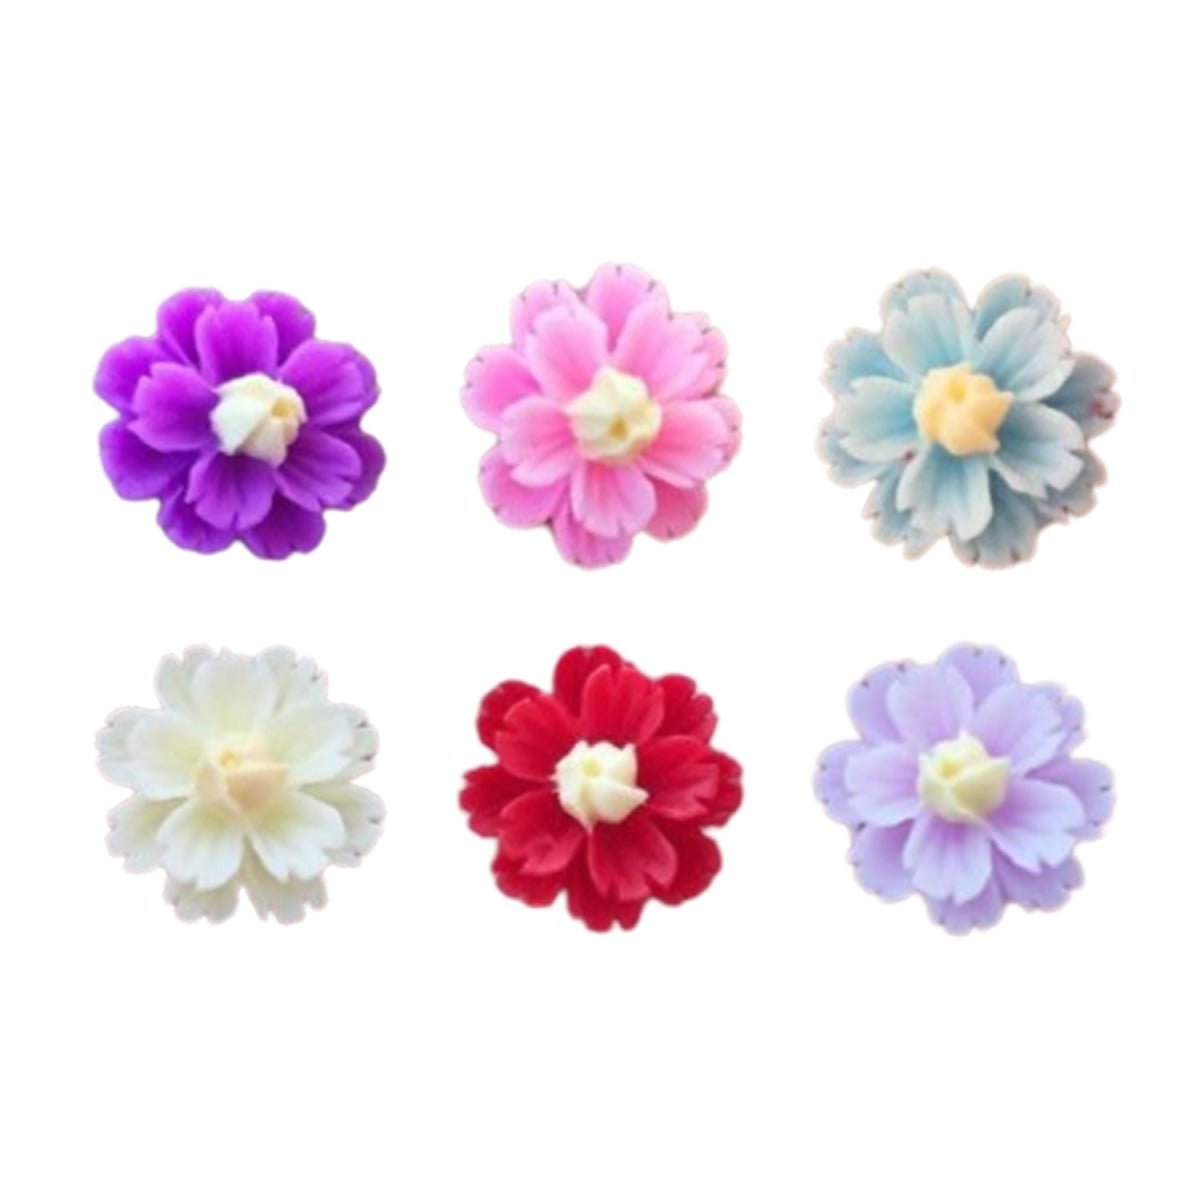 40pcs 3D Flower Flatback Embellishment 13mm Resin Shape Decorations DIY Crafts - Mixed - - Asia Sell